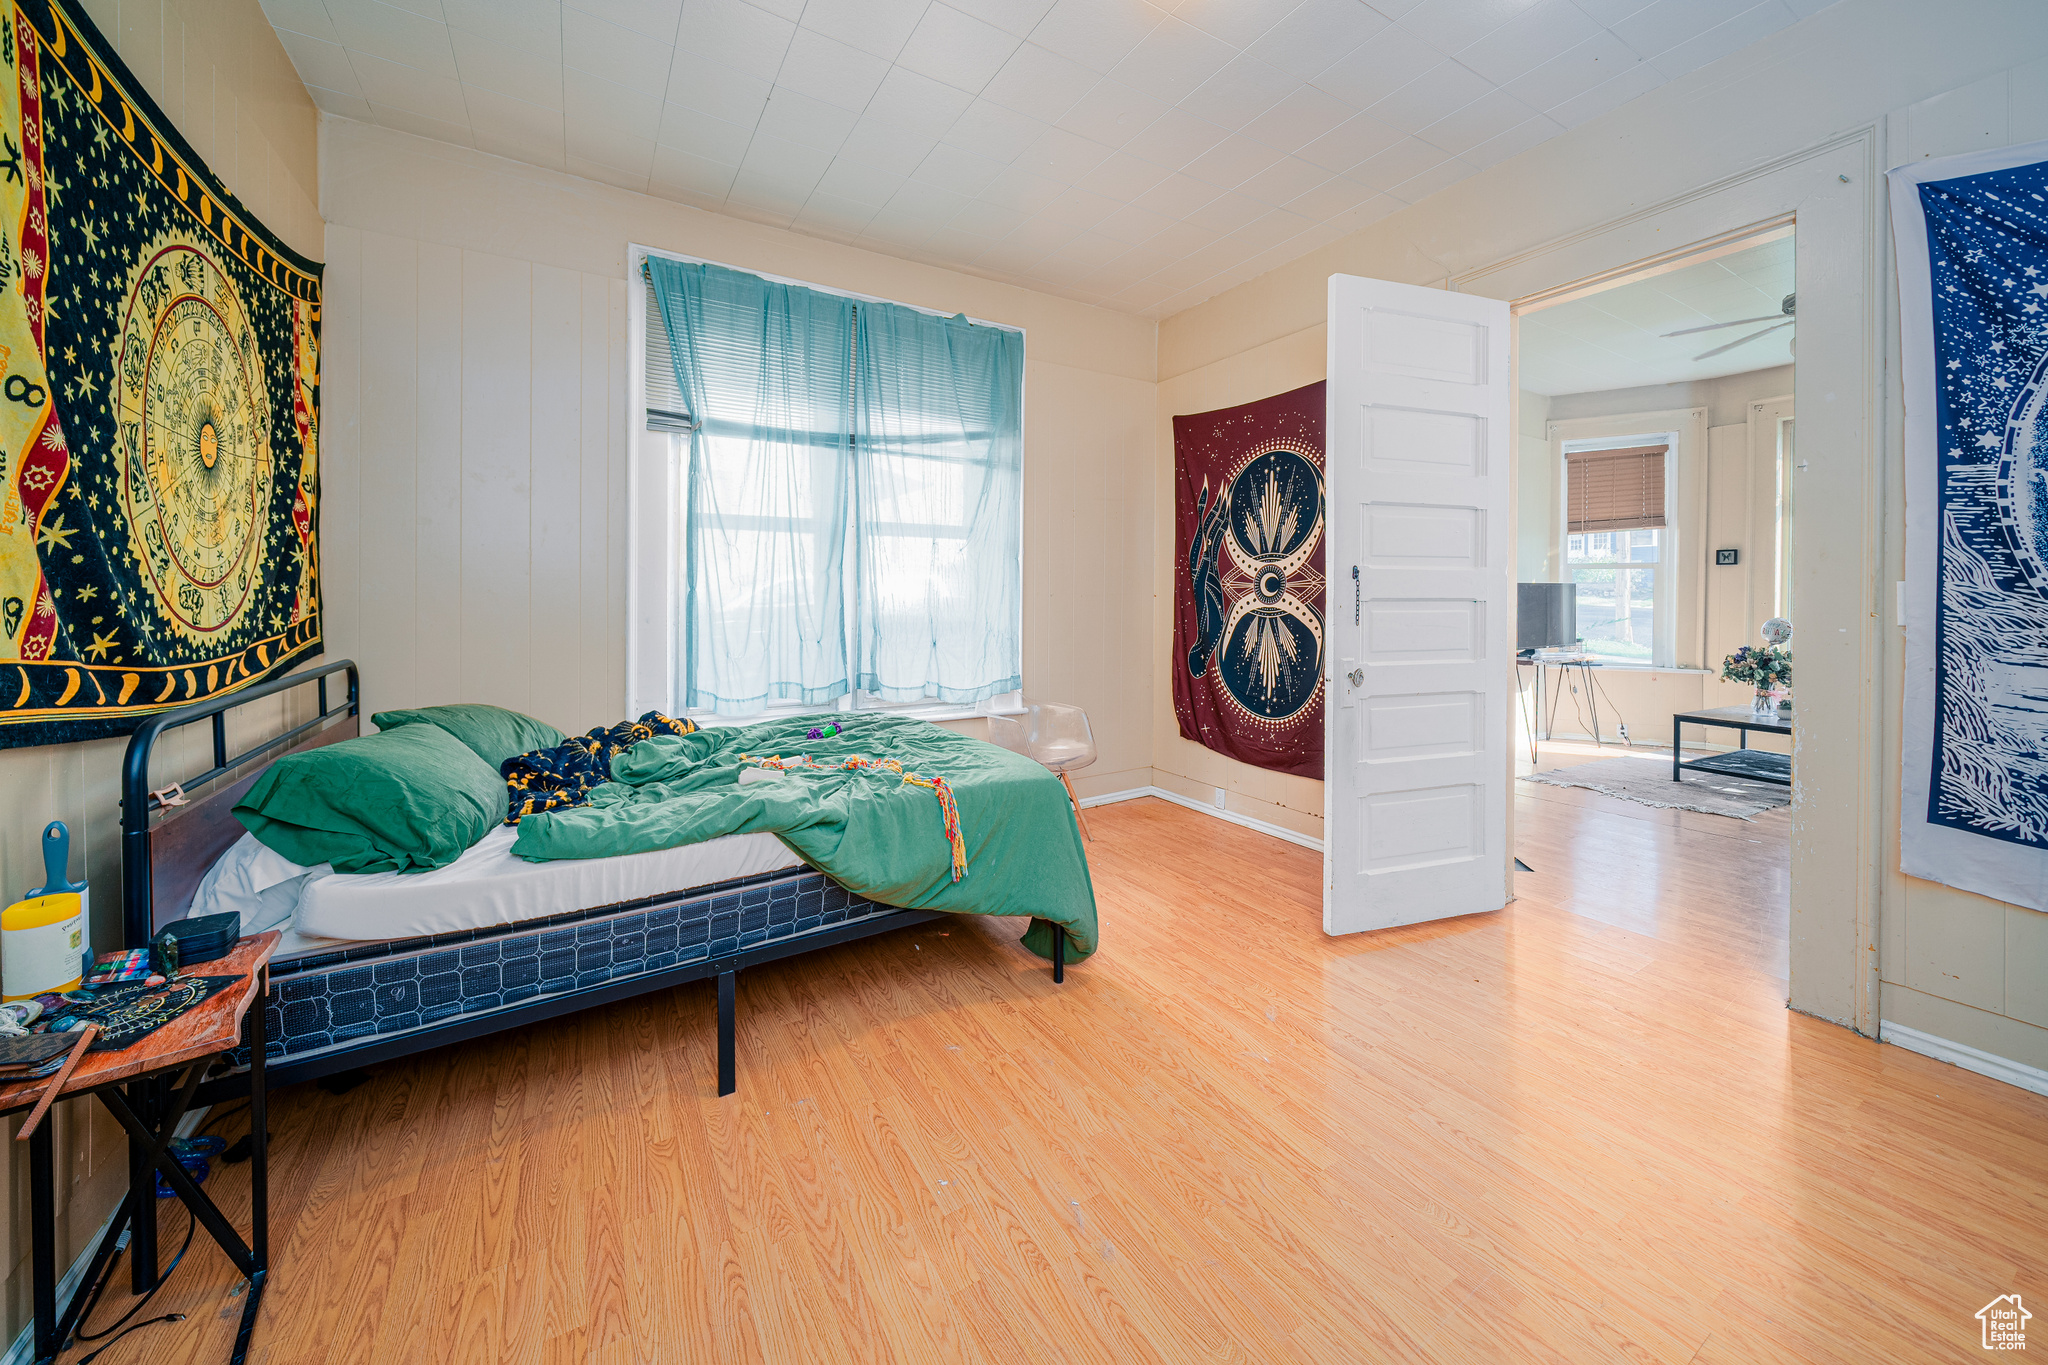 Bedroom featuring light wood-style floors